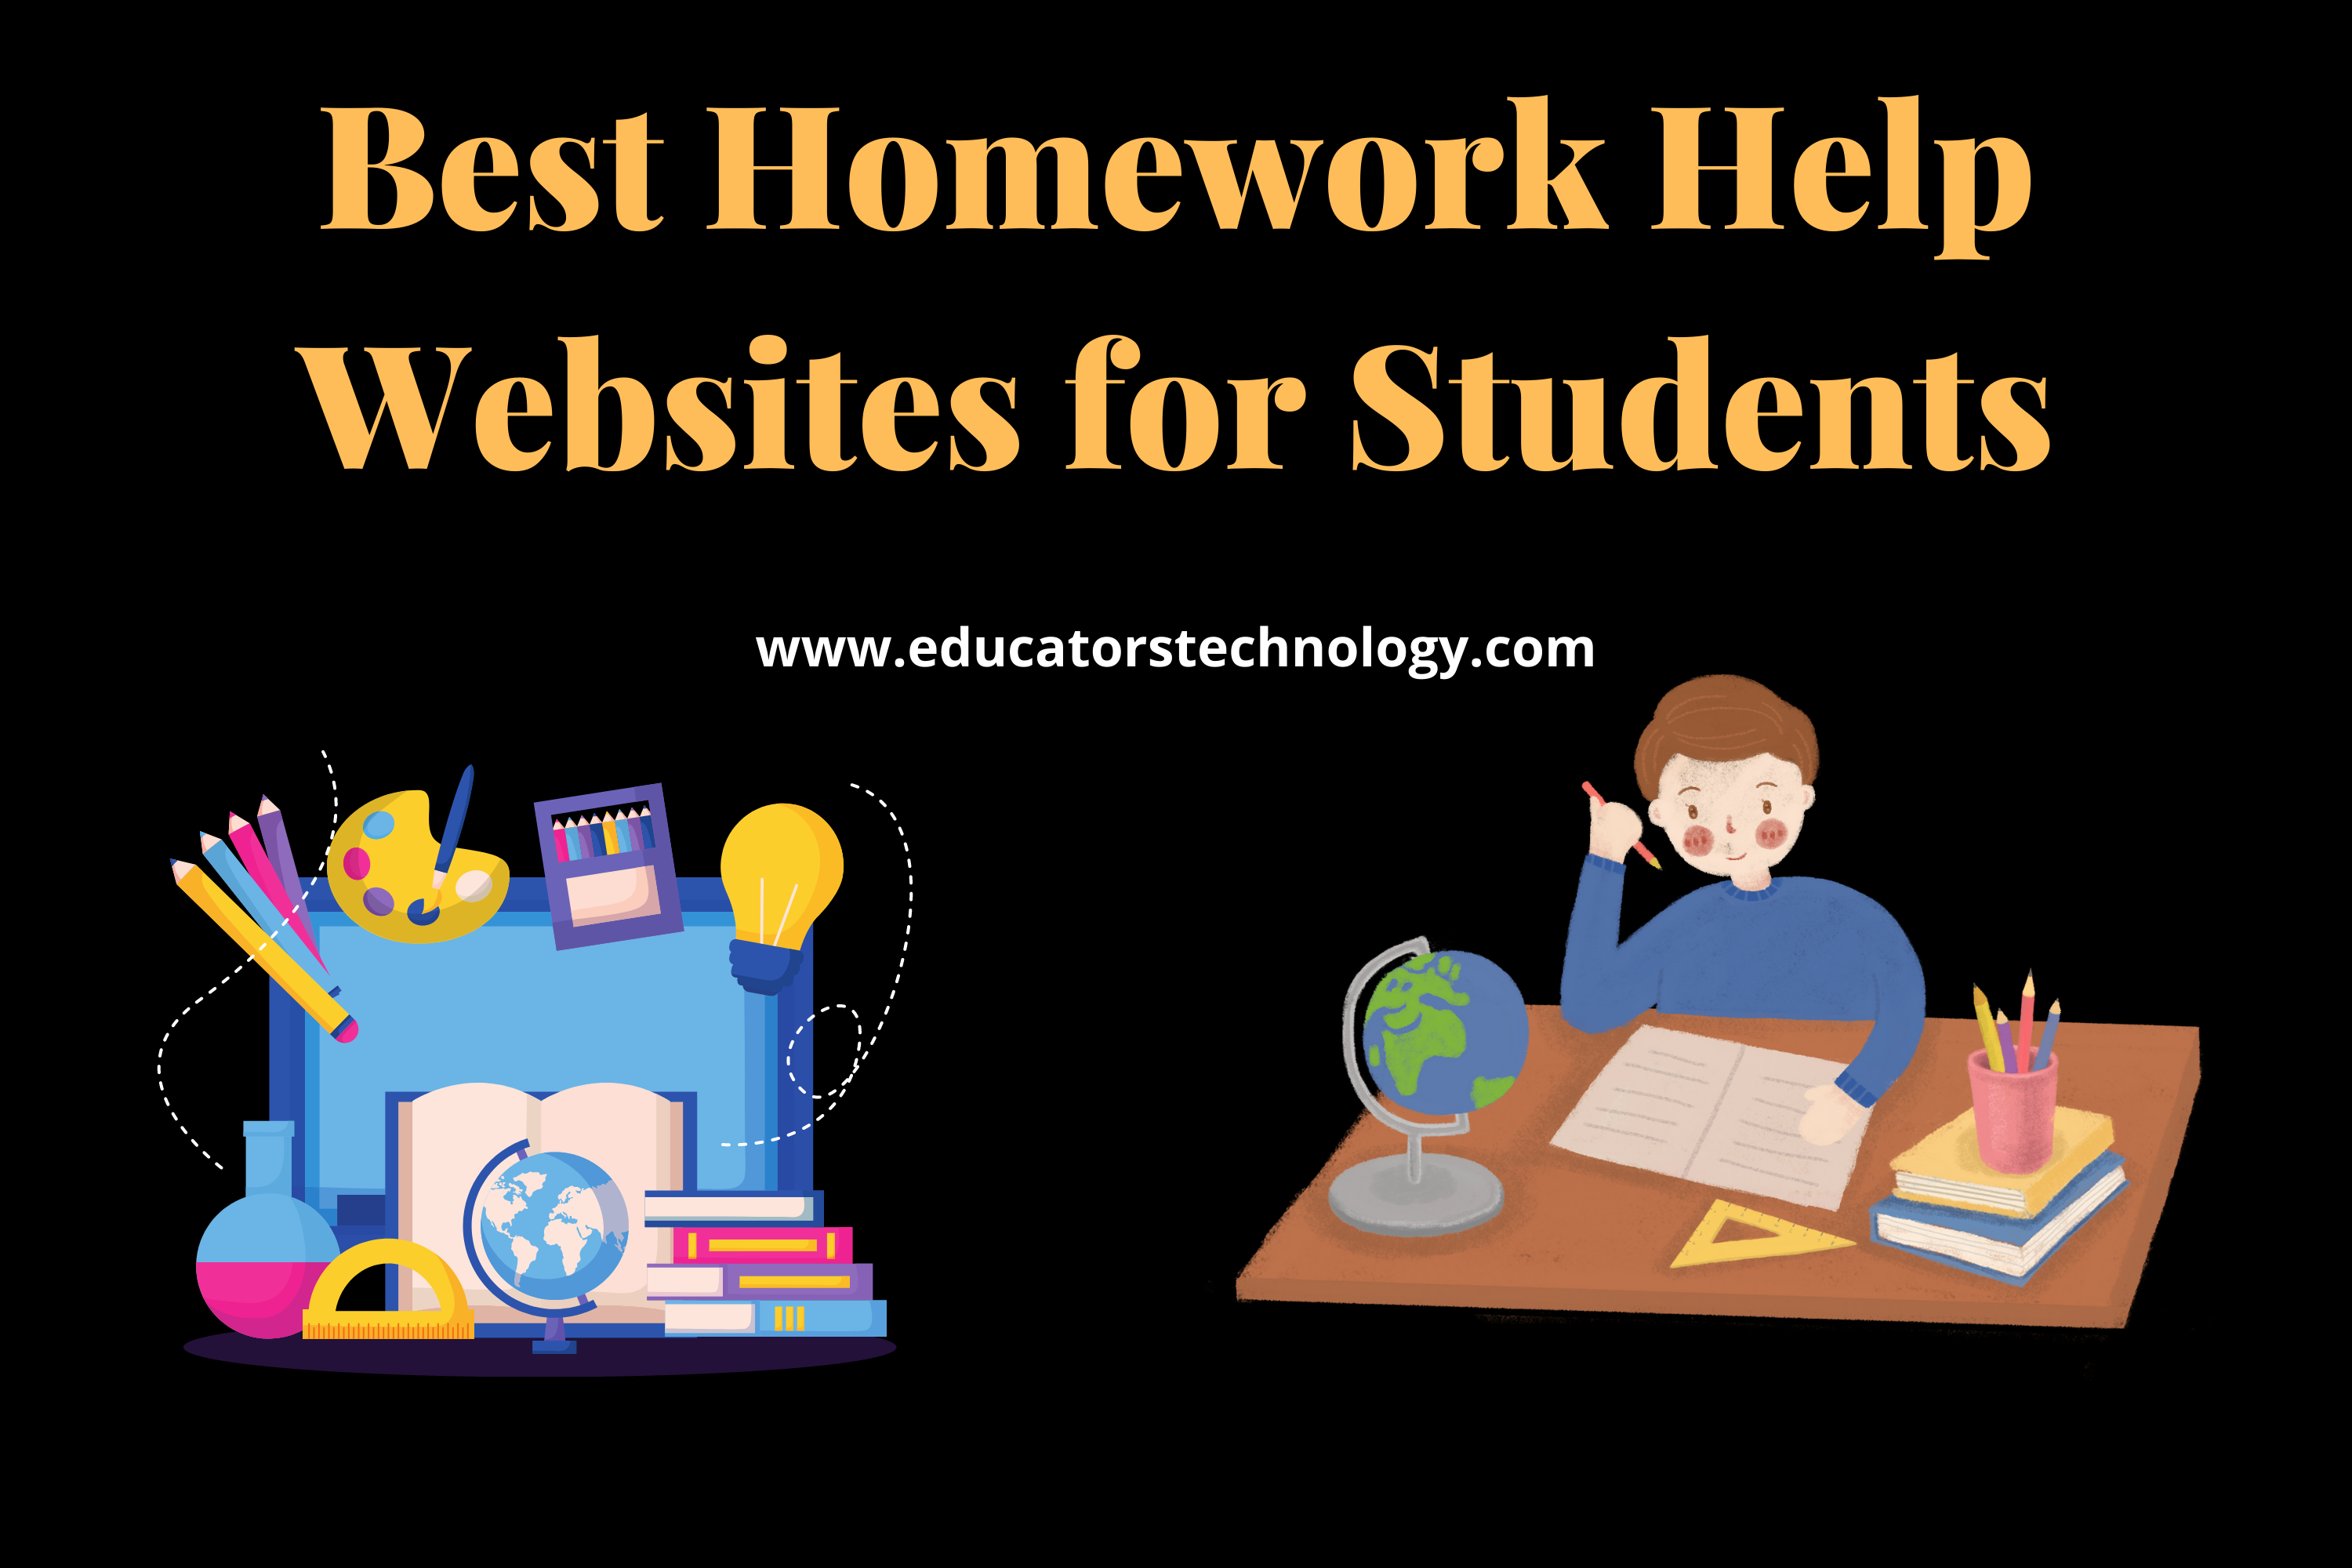 best homework help websites for college students